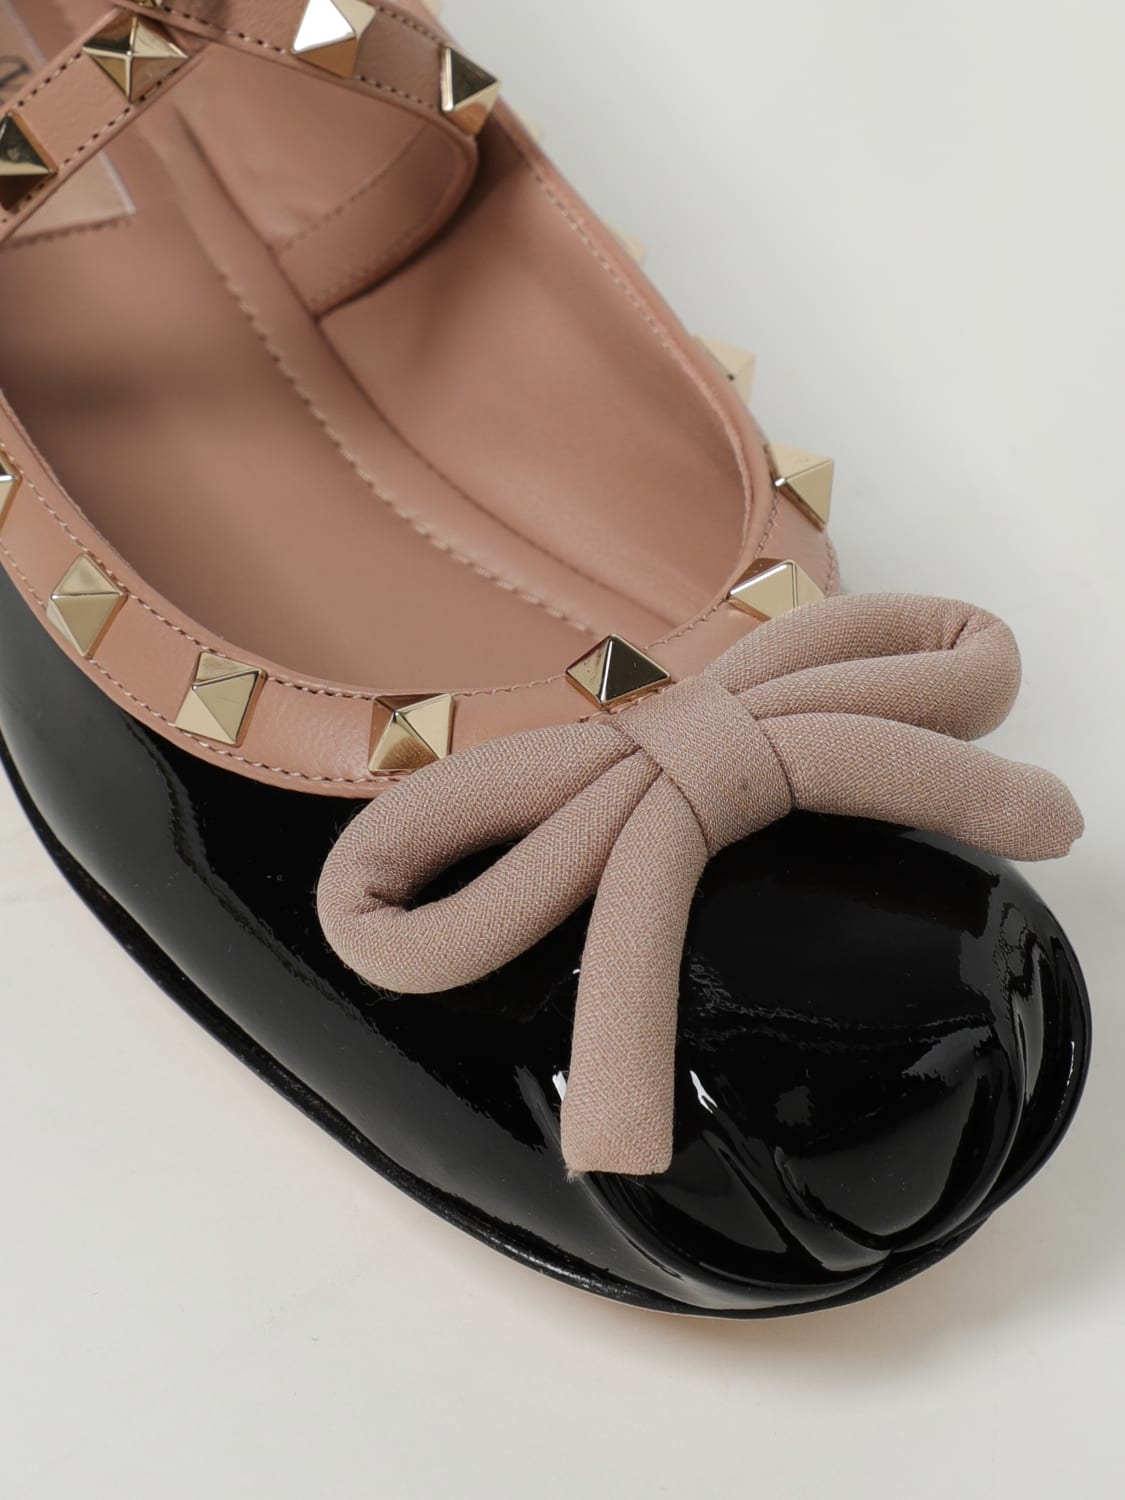 Valentino Garavani Rockstud leather ballerina shoes - Black